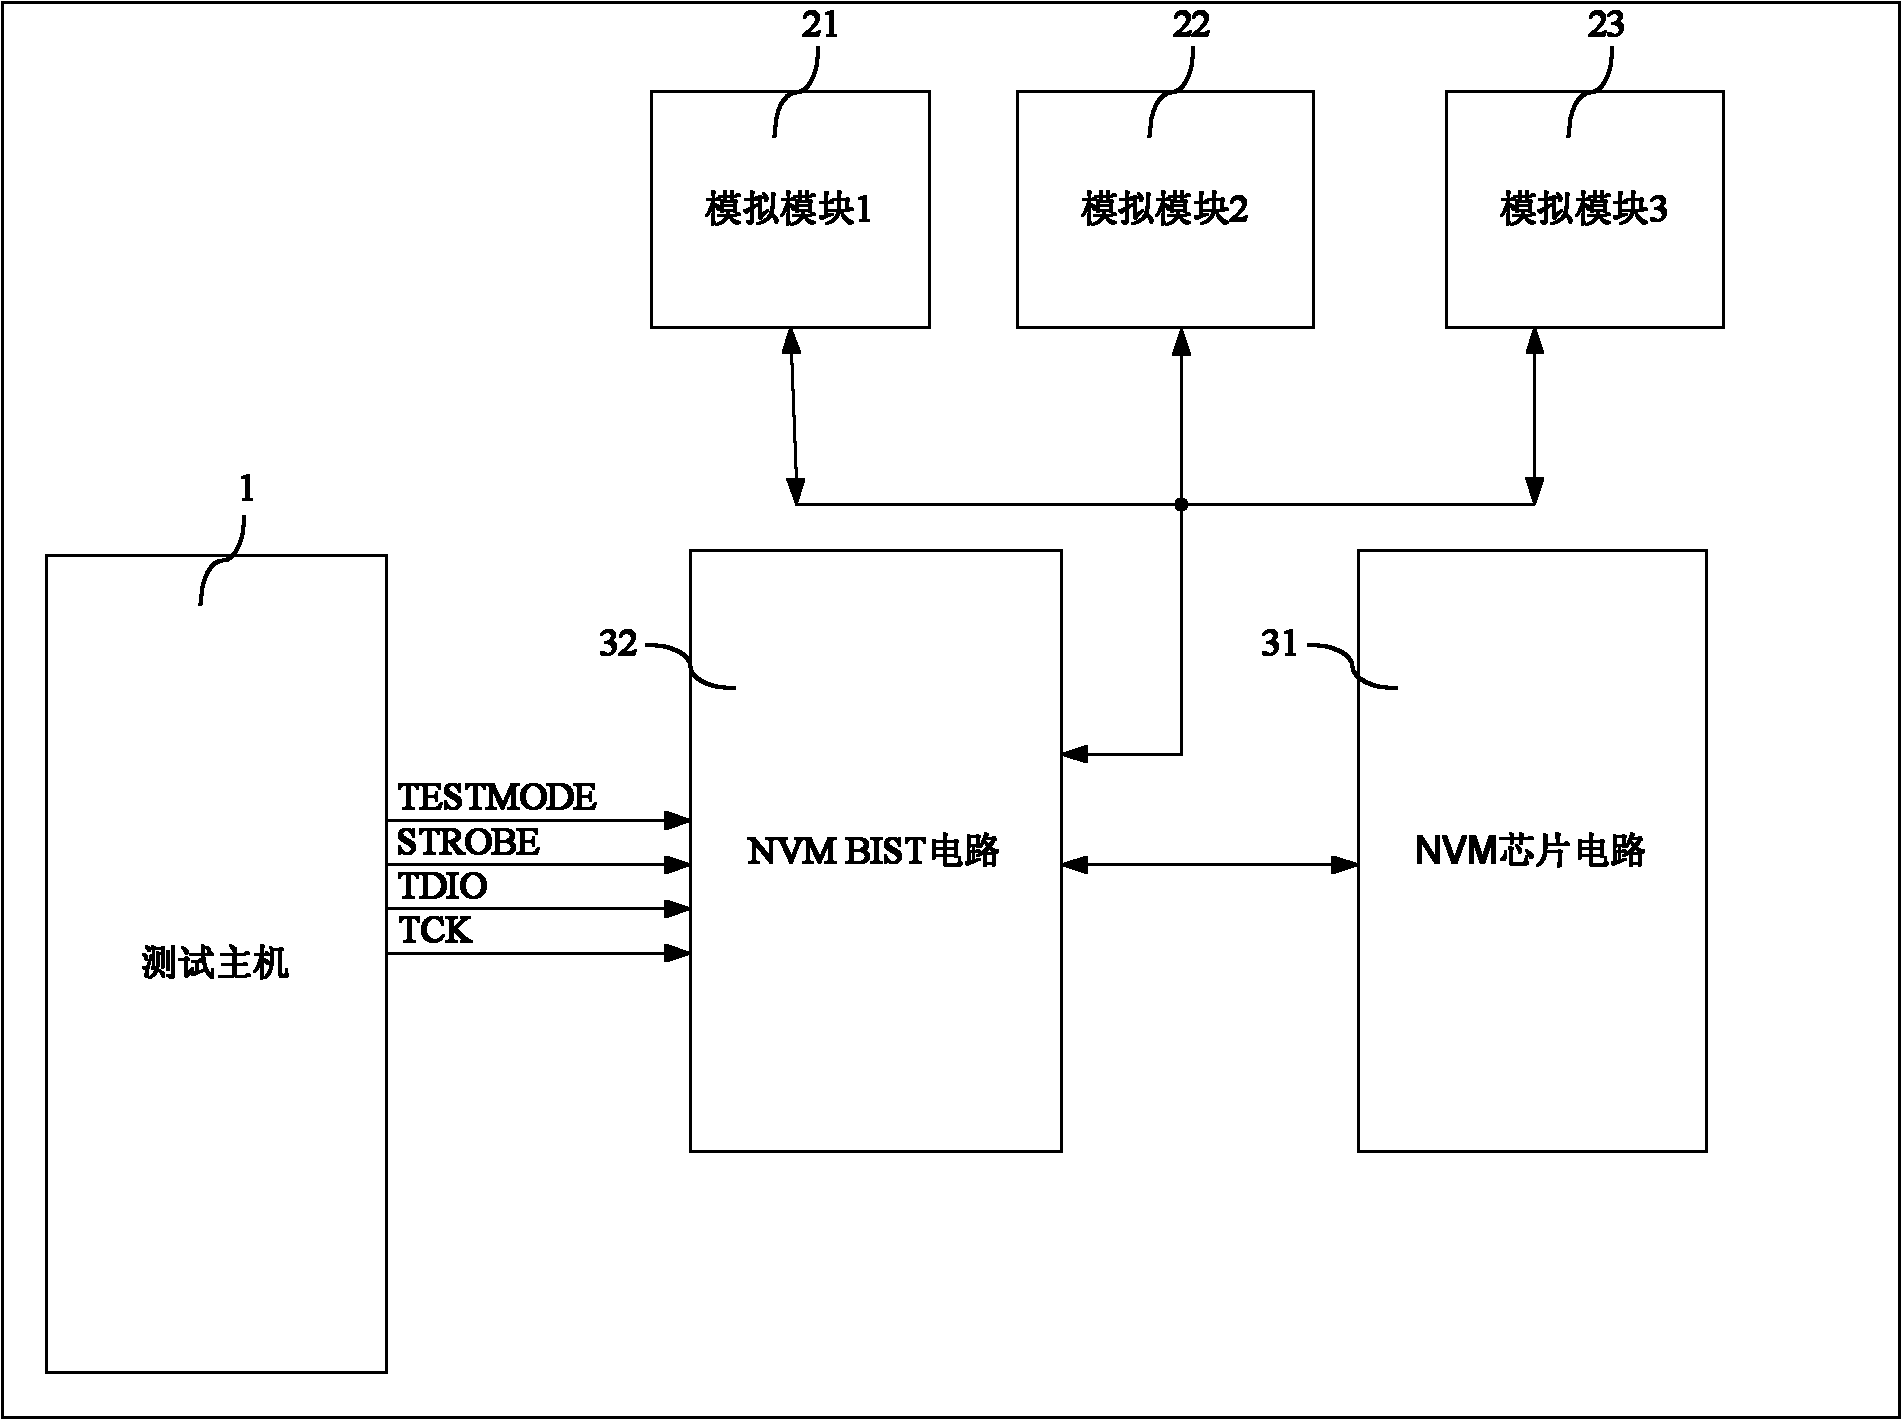 Simulation testing system of non-volatile memory (NVM) built-in self-testing circuit